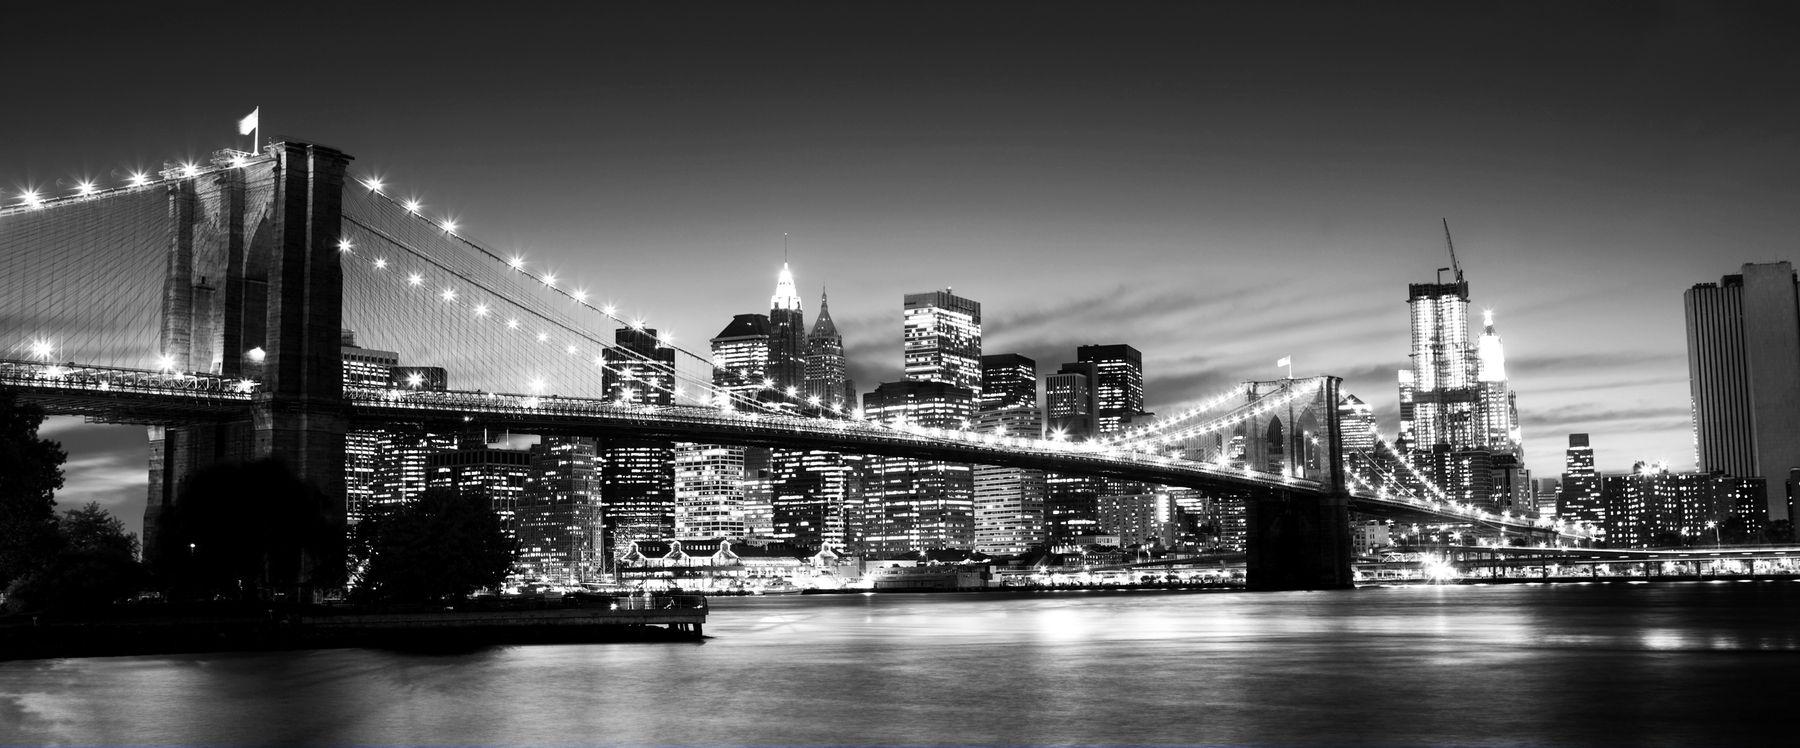 Brooklyn Bridge Black and White Wallpapers - Top Free Brooklyn Bridge ...